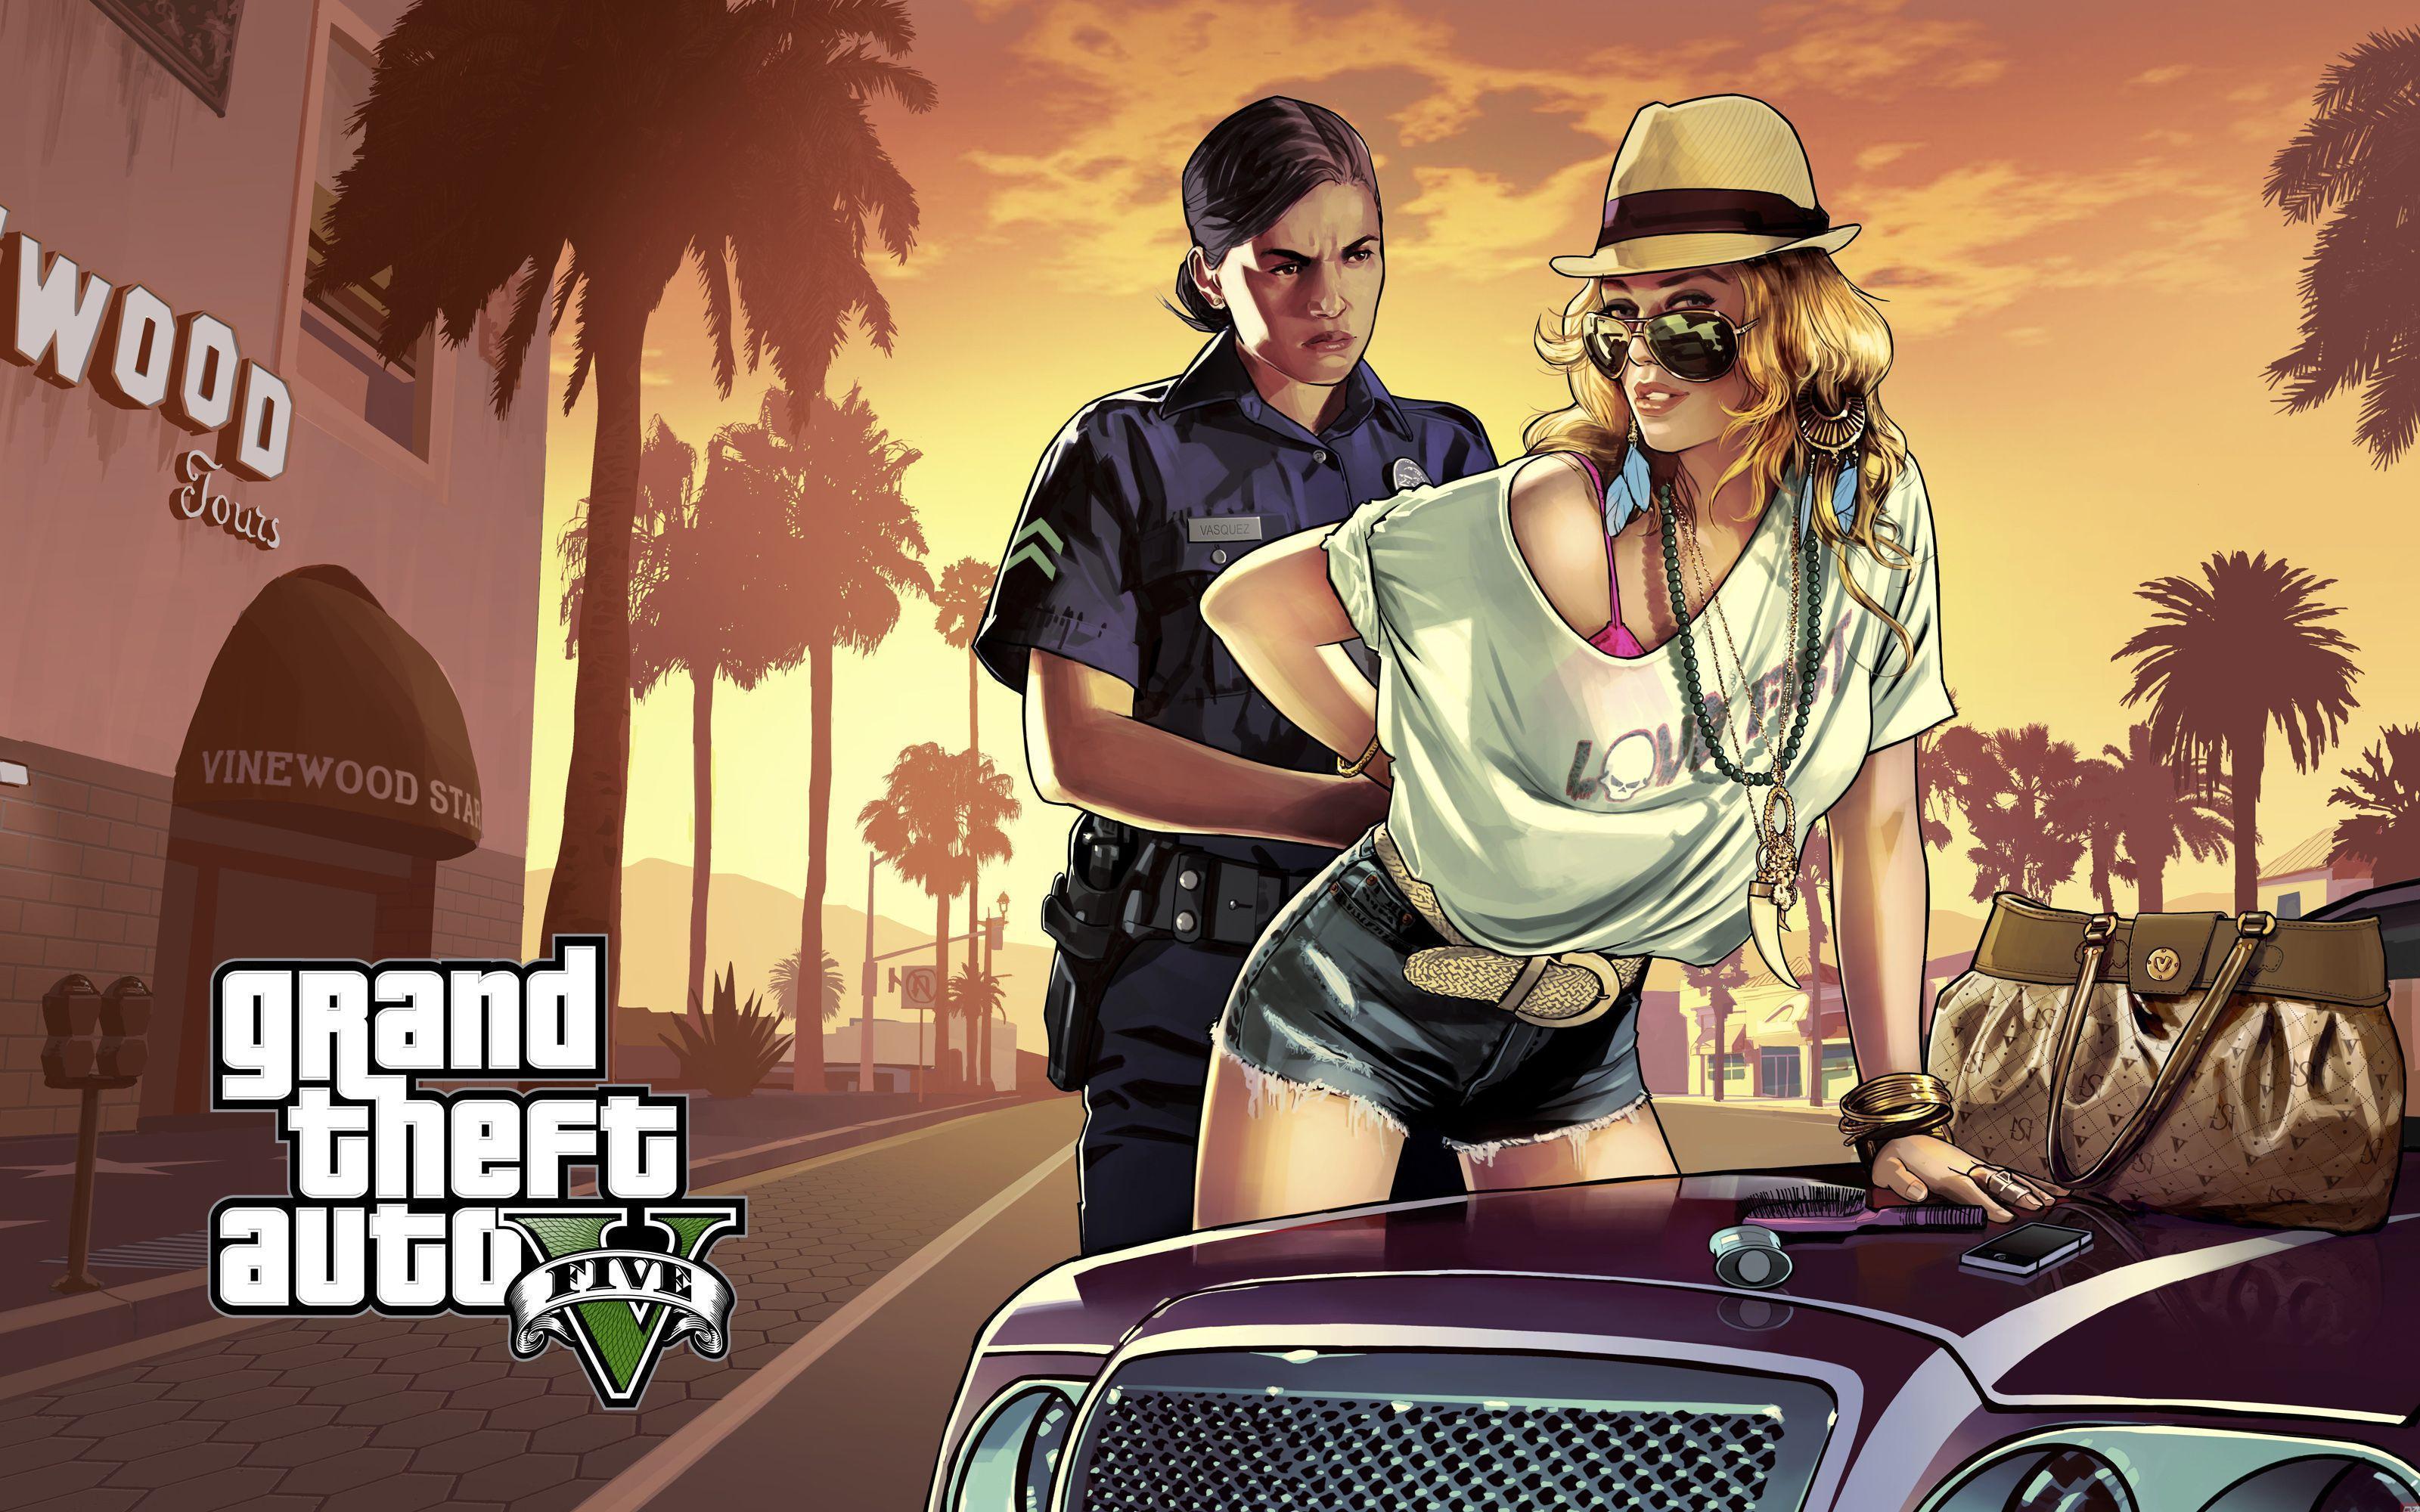 Grand Theft Auto V cover art  Virtual Backgrounds